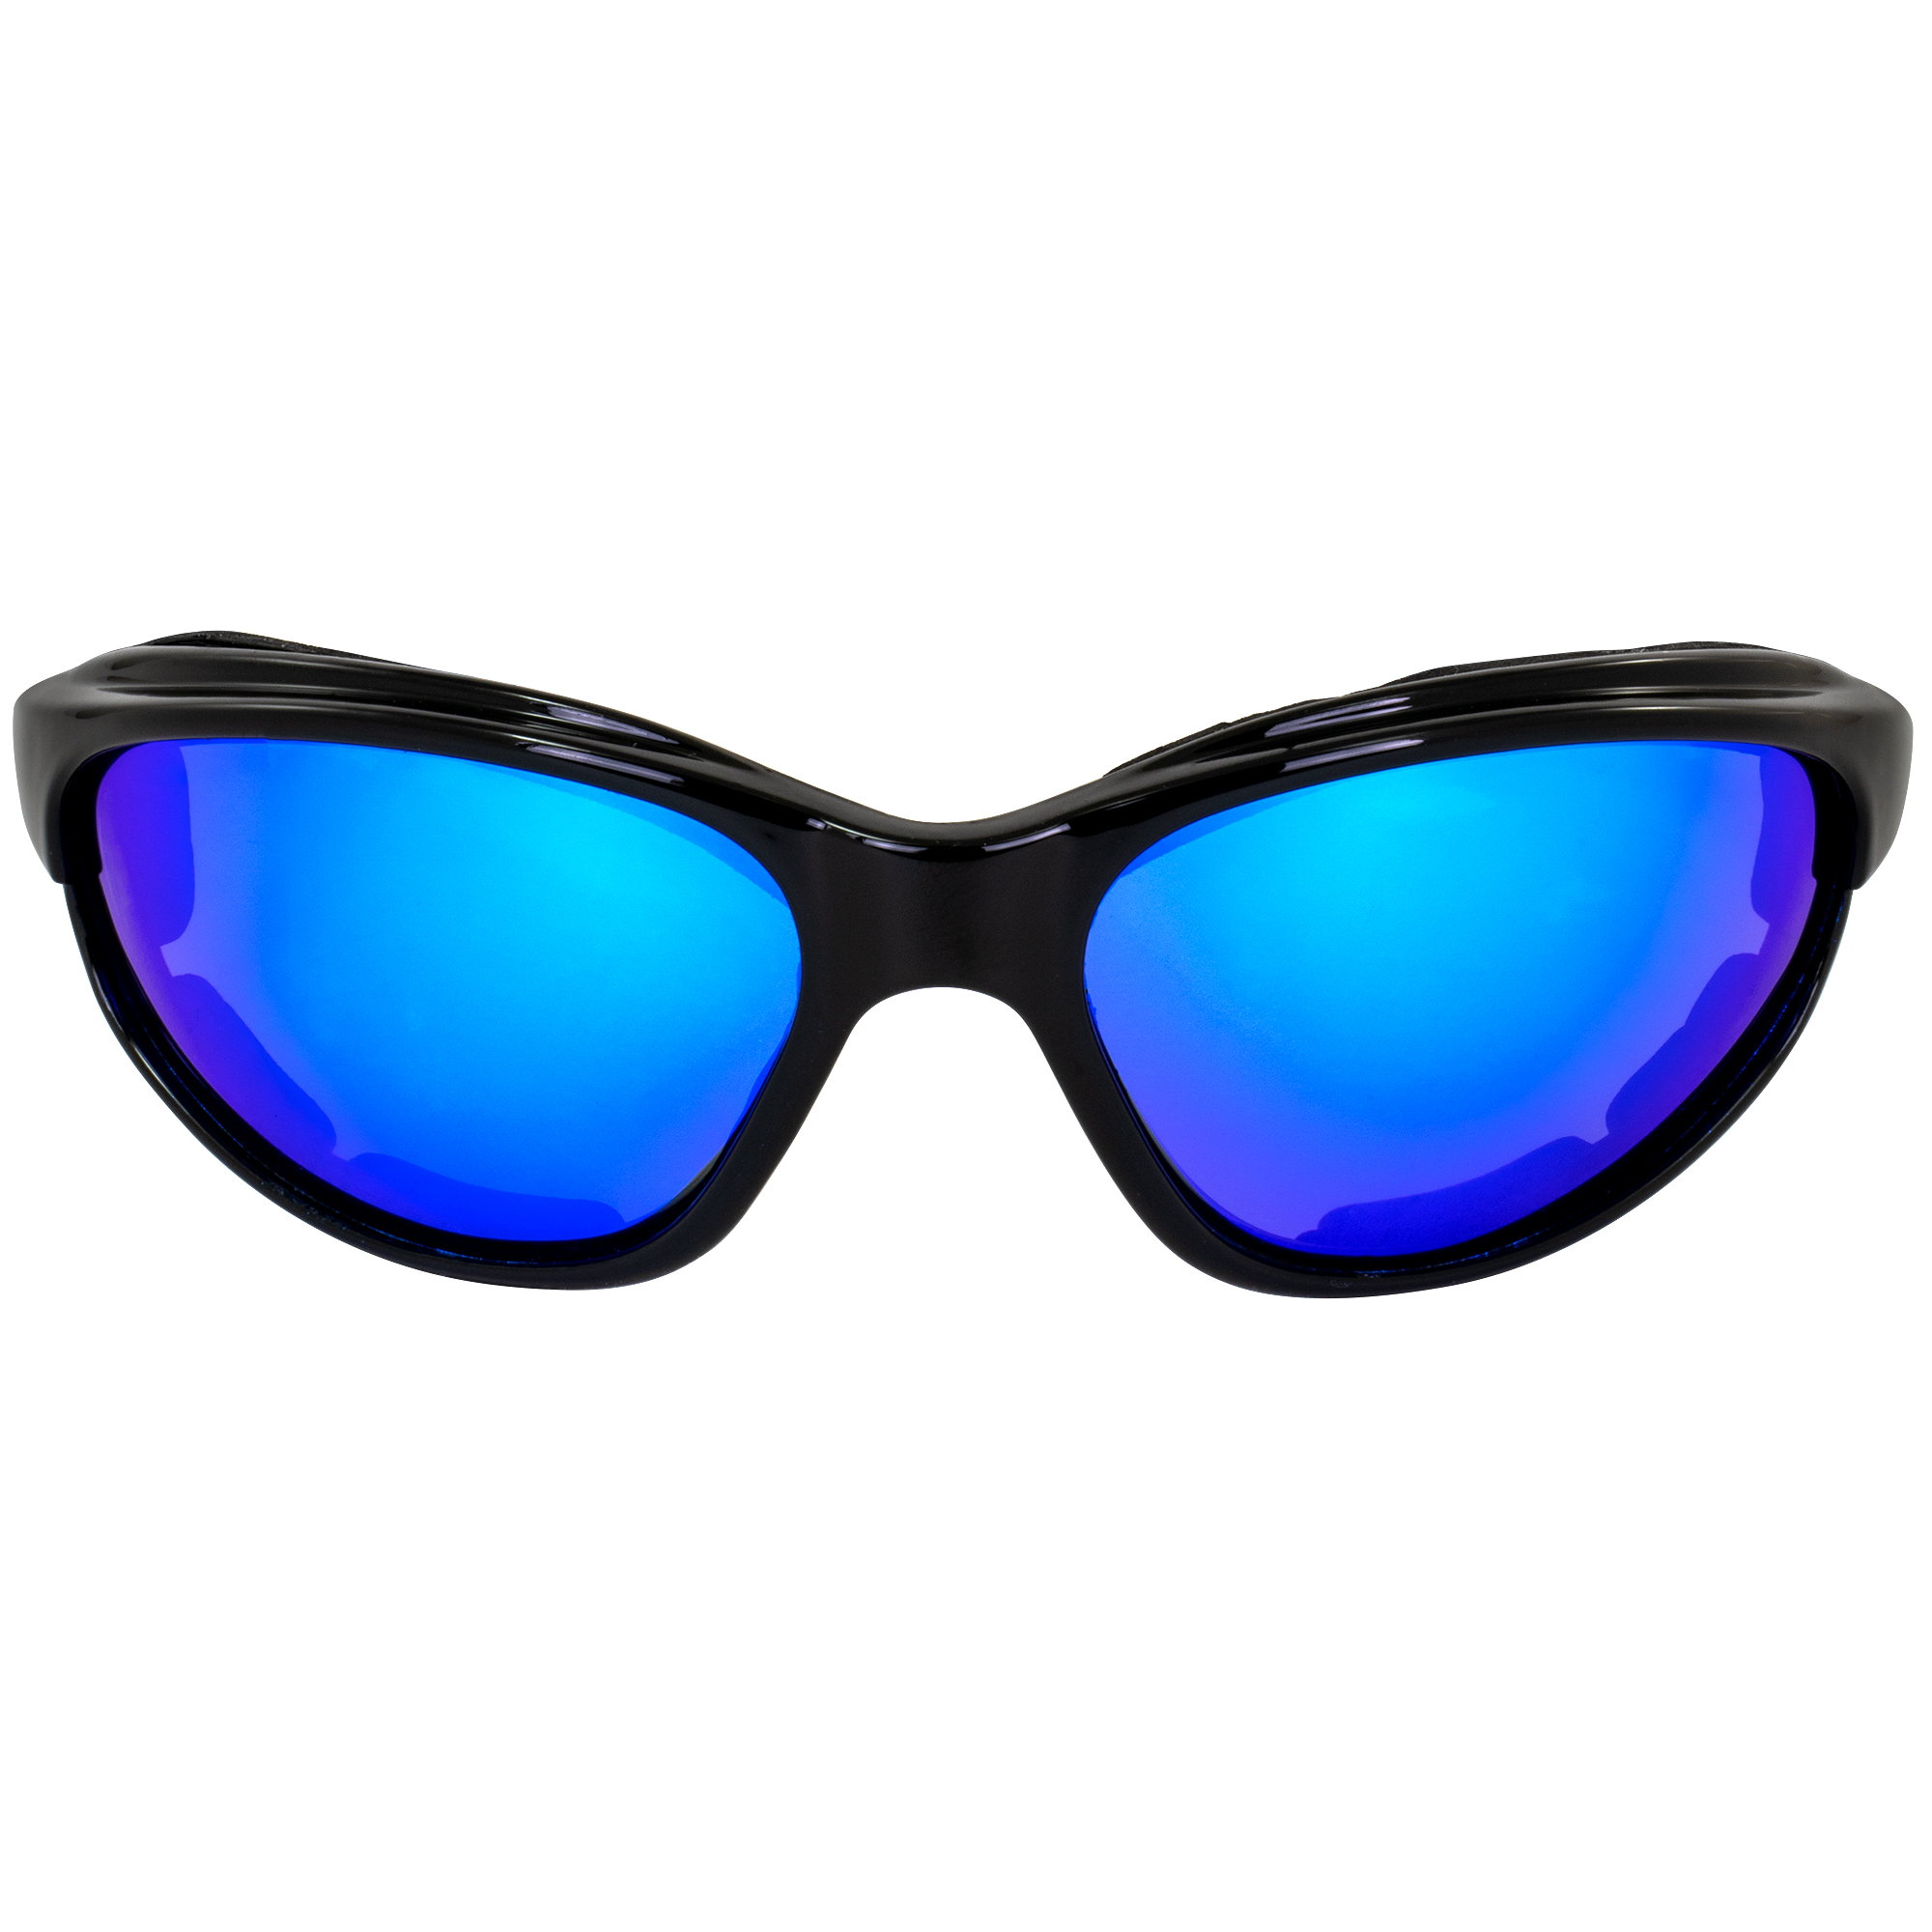 Birdz Eyewear Sail Padded Jetski Sunglasses Goggles Polarized Sports Watersports Boating Fishing for Men or Women Black Frame w/Blue Mirror Lens - image 2 of 6